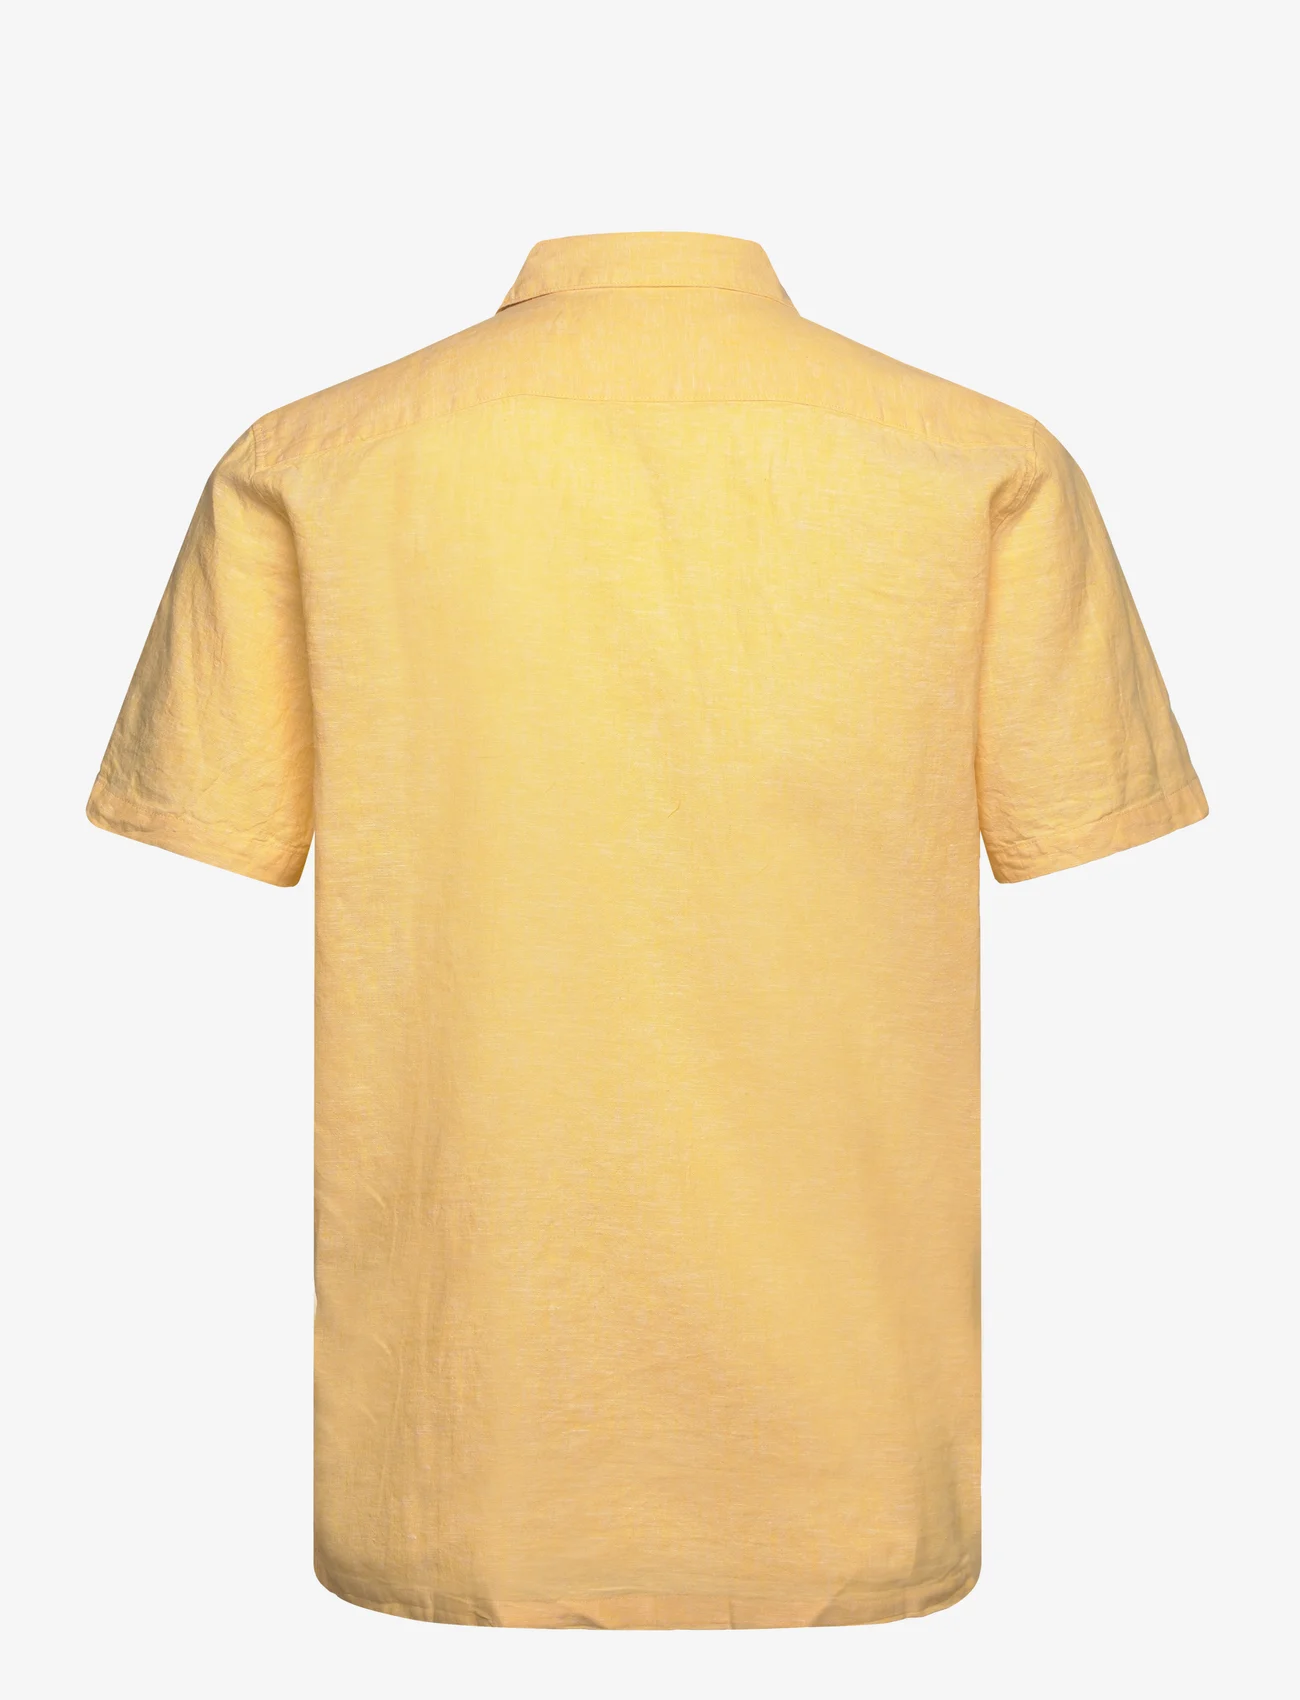 Lindbergh - Casual linen blend resort S/S - koszule lniane - mid yellow - 1